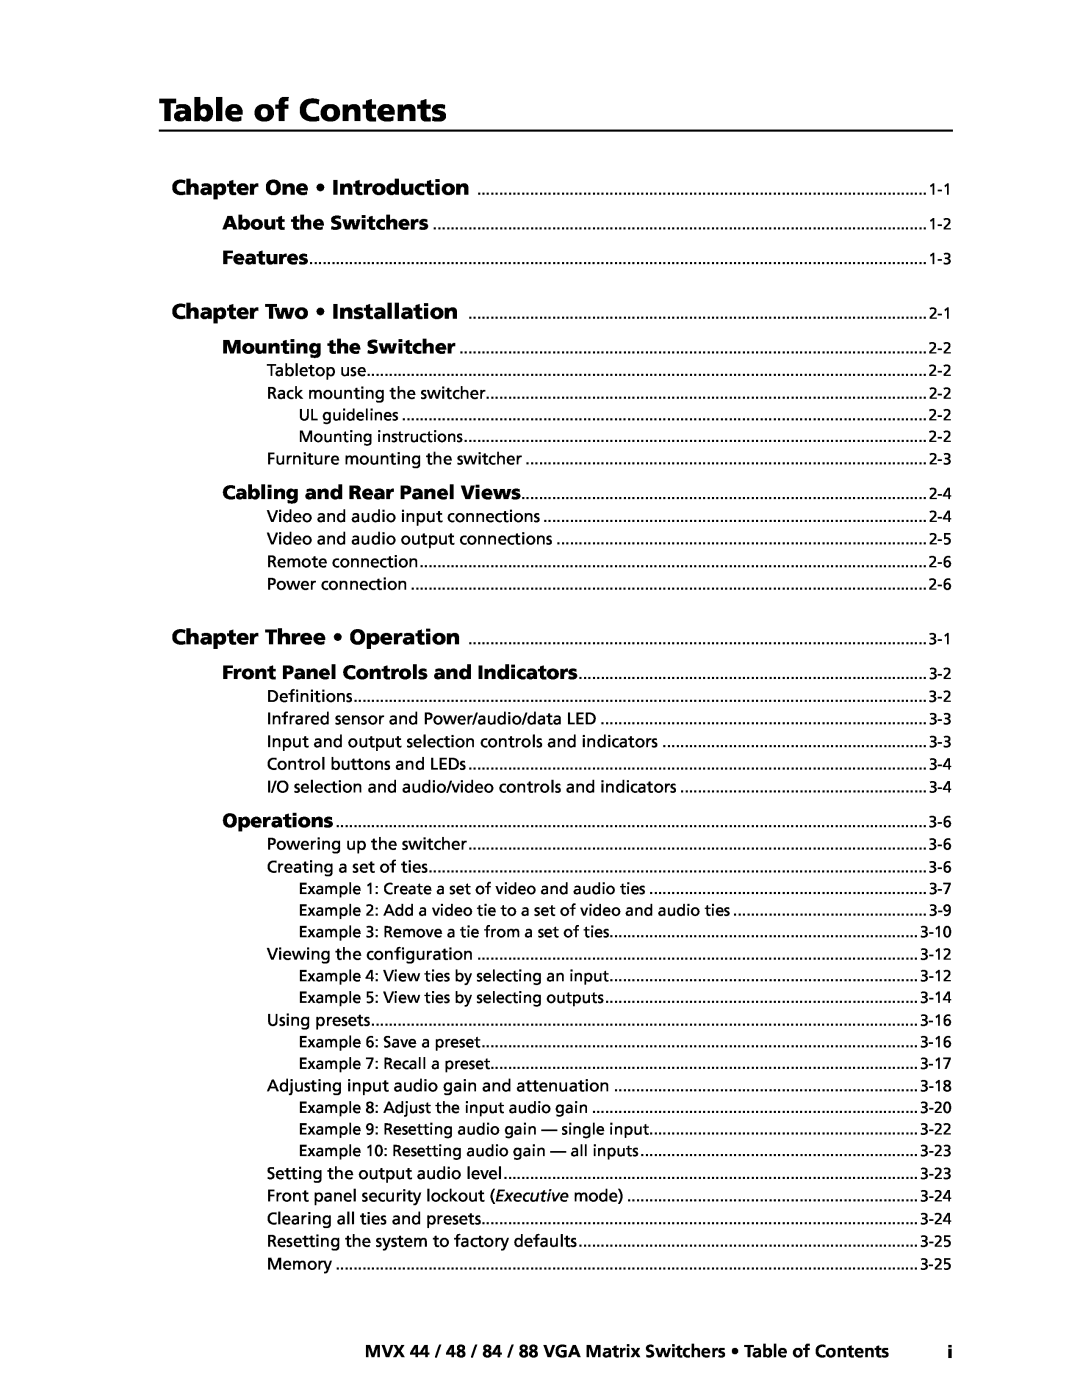 Extron electronic MVX 88 Series manual MVX 44 / 48 / 84 / 88 VGA Matrix Switchers Table of Contents, Preliminary 